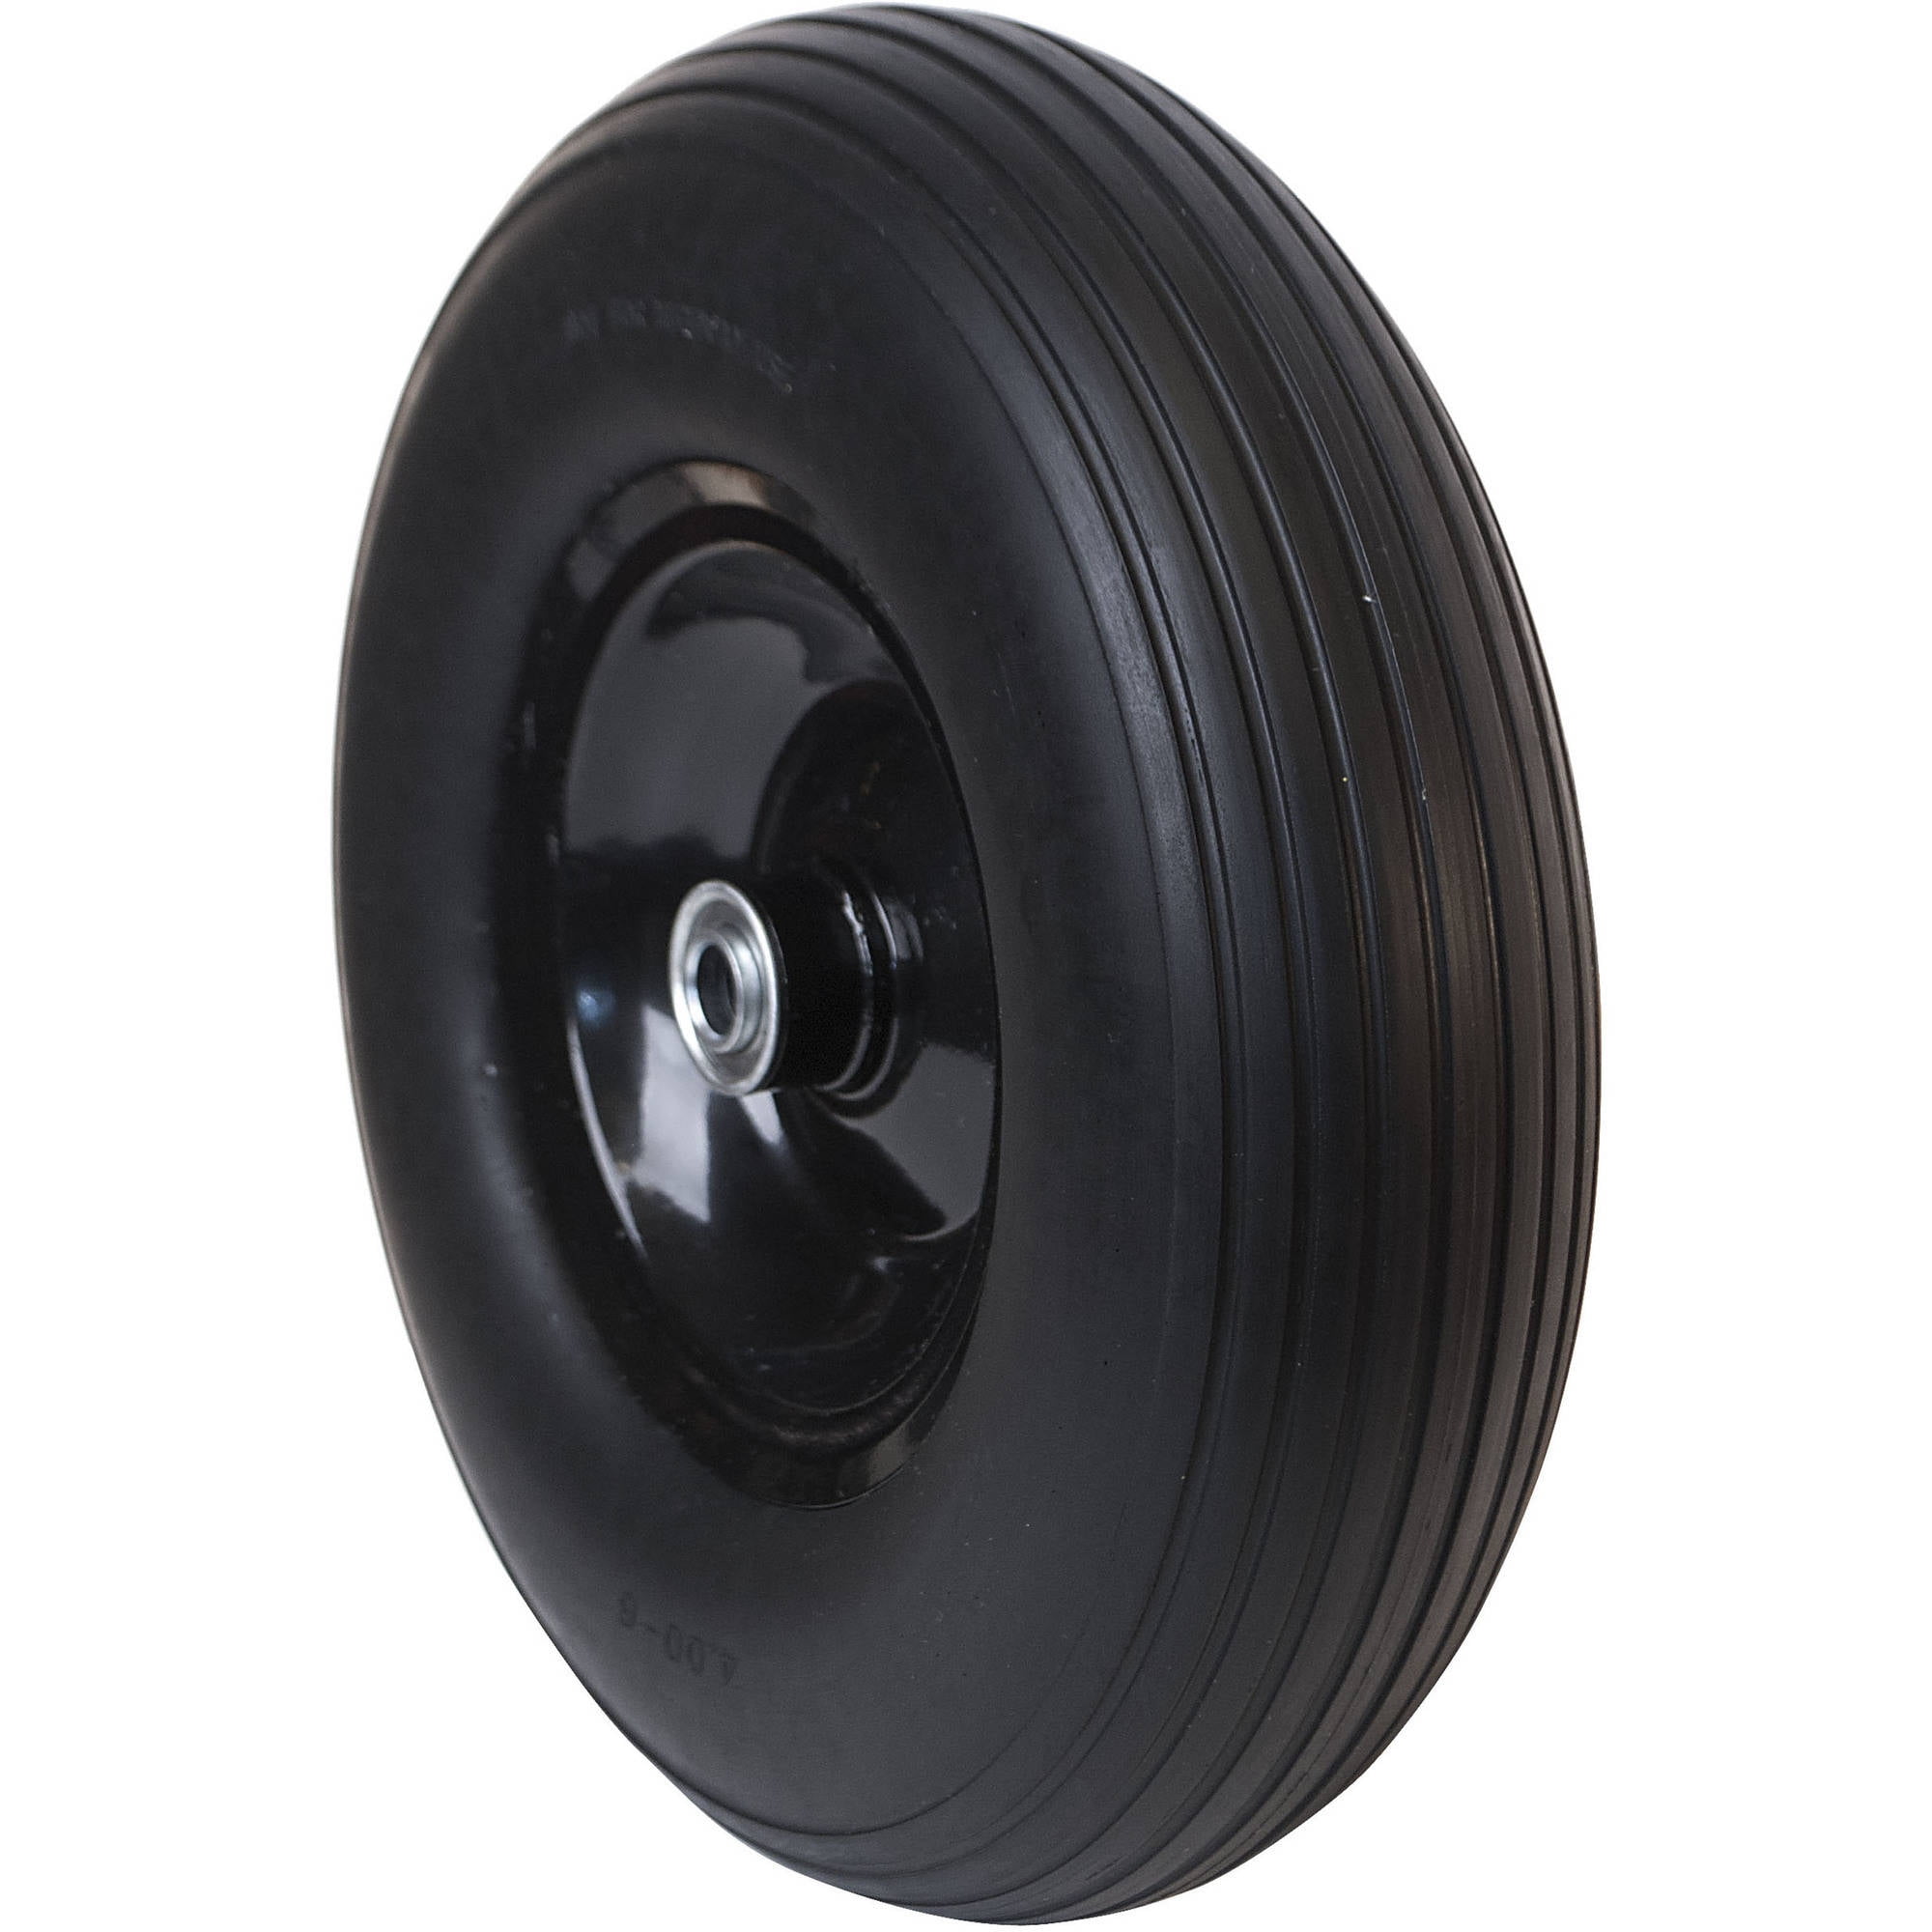 New 13x6.50-6 Flat-Free Smooth Tires w/Steel Rim for Lawn Mower Gardo 1-Pc-Set